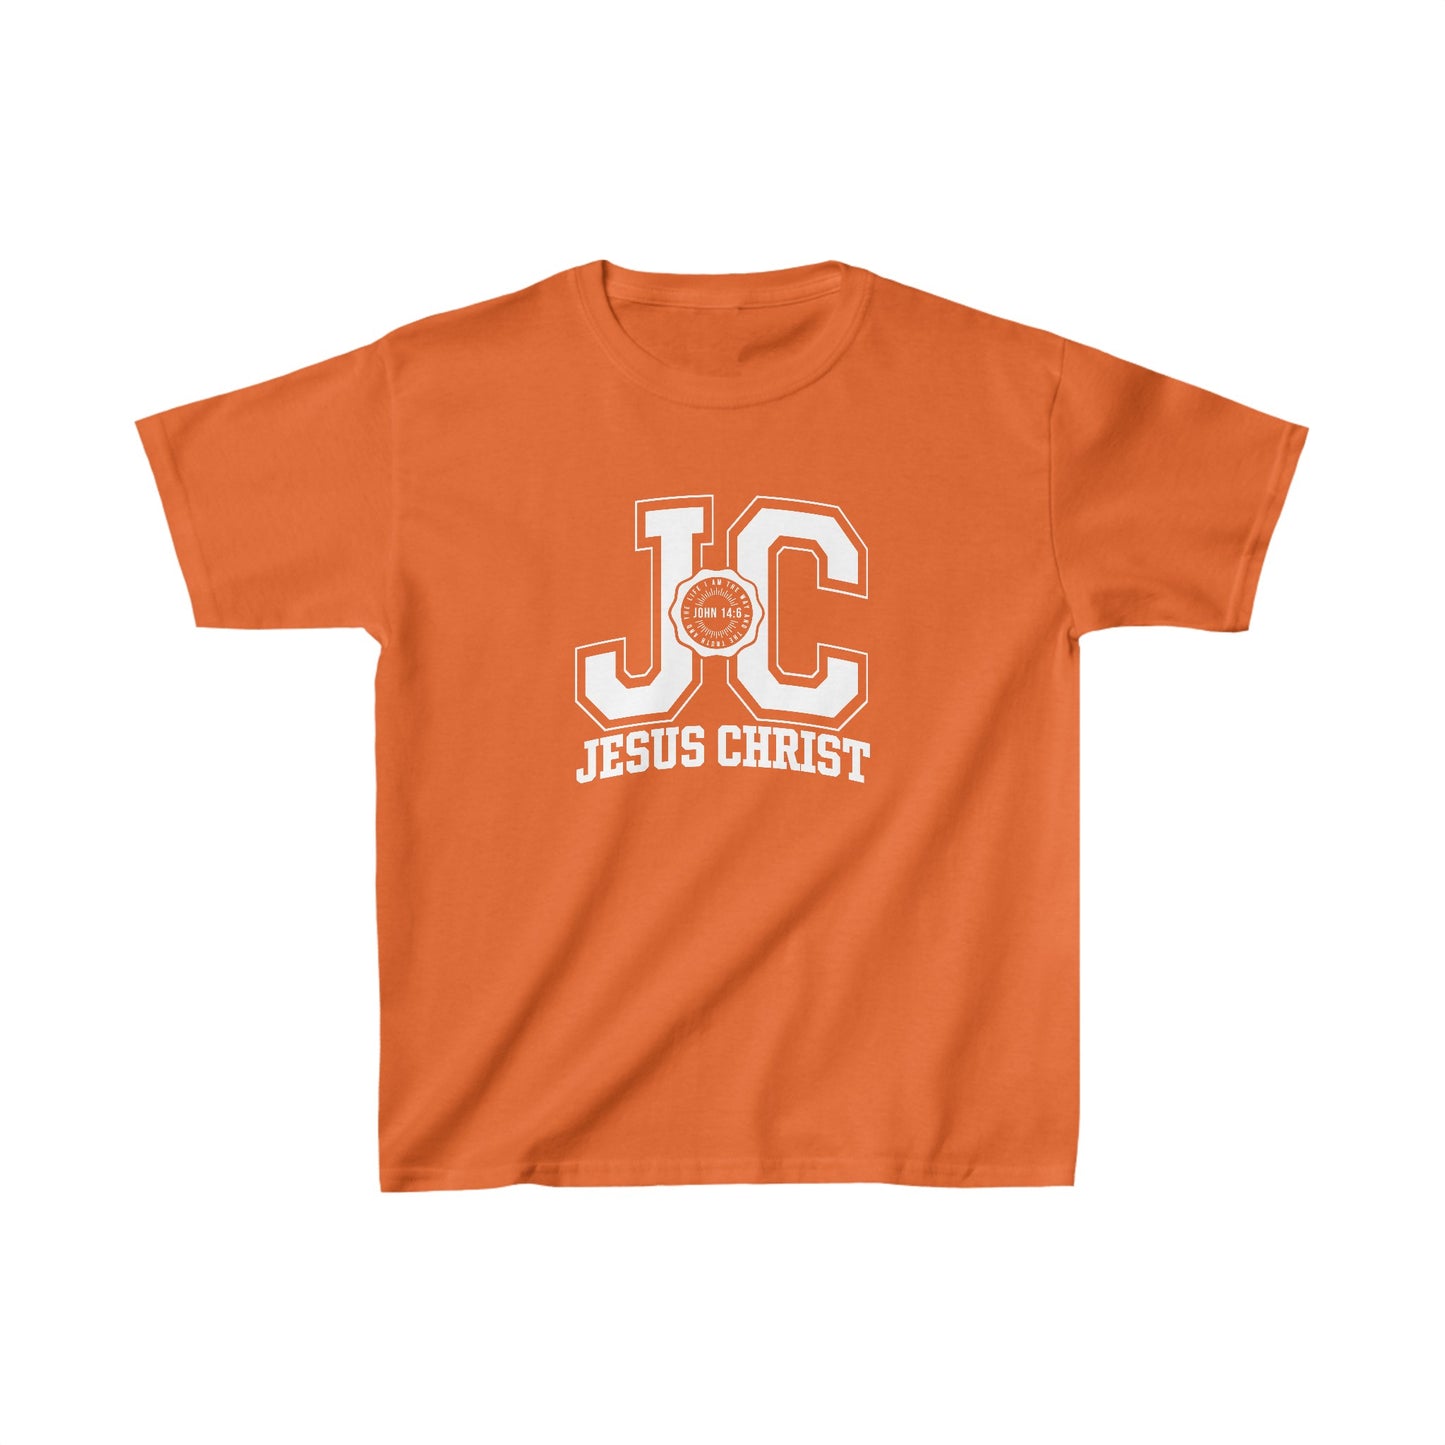 JC Jesus Christ Youth Christian T-Shirt